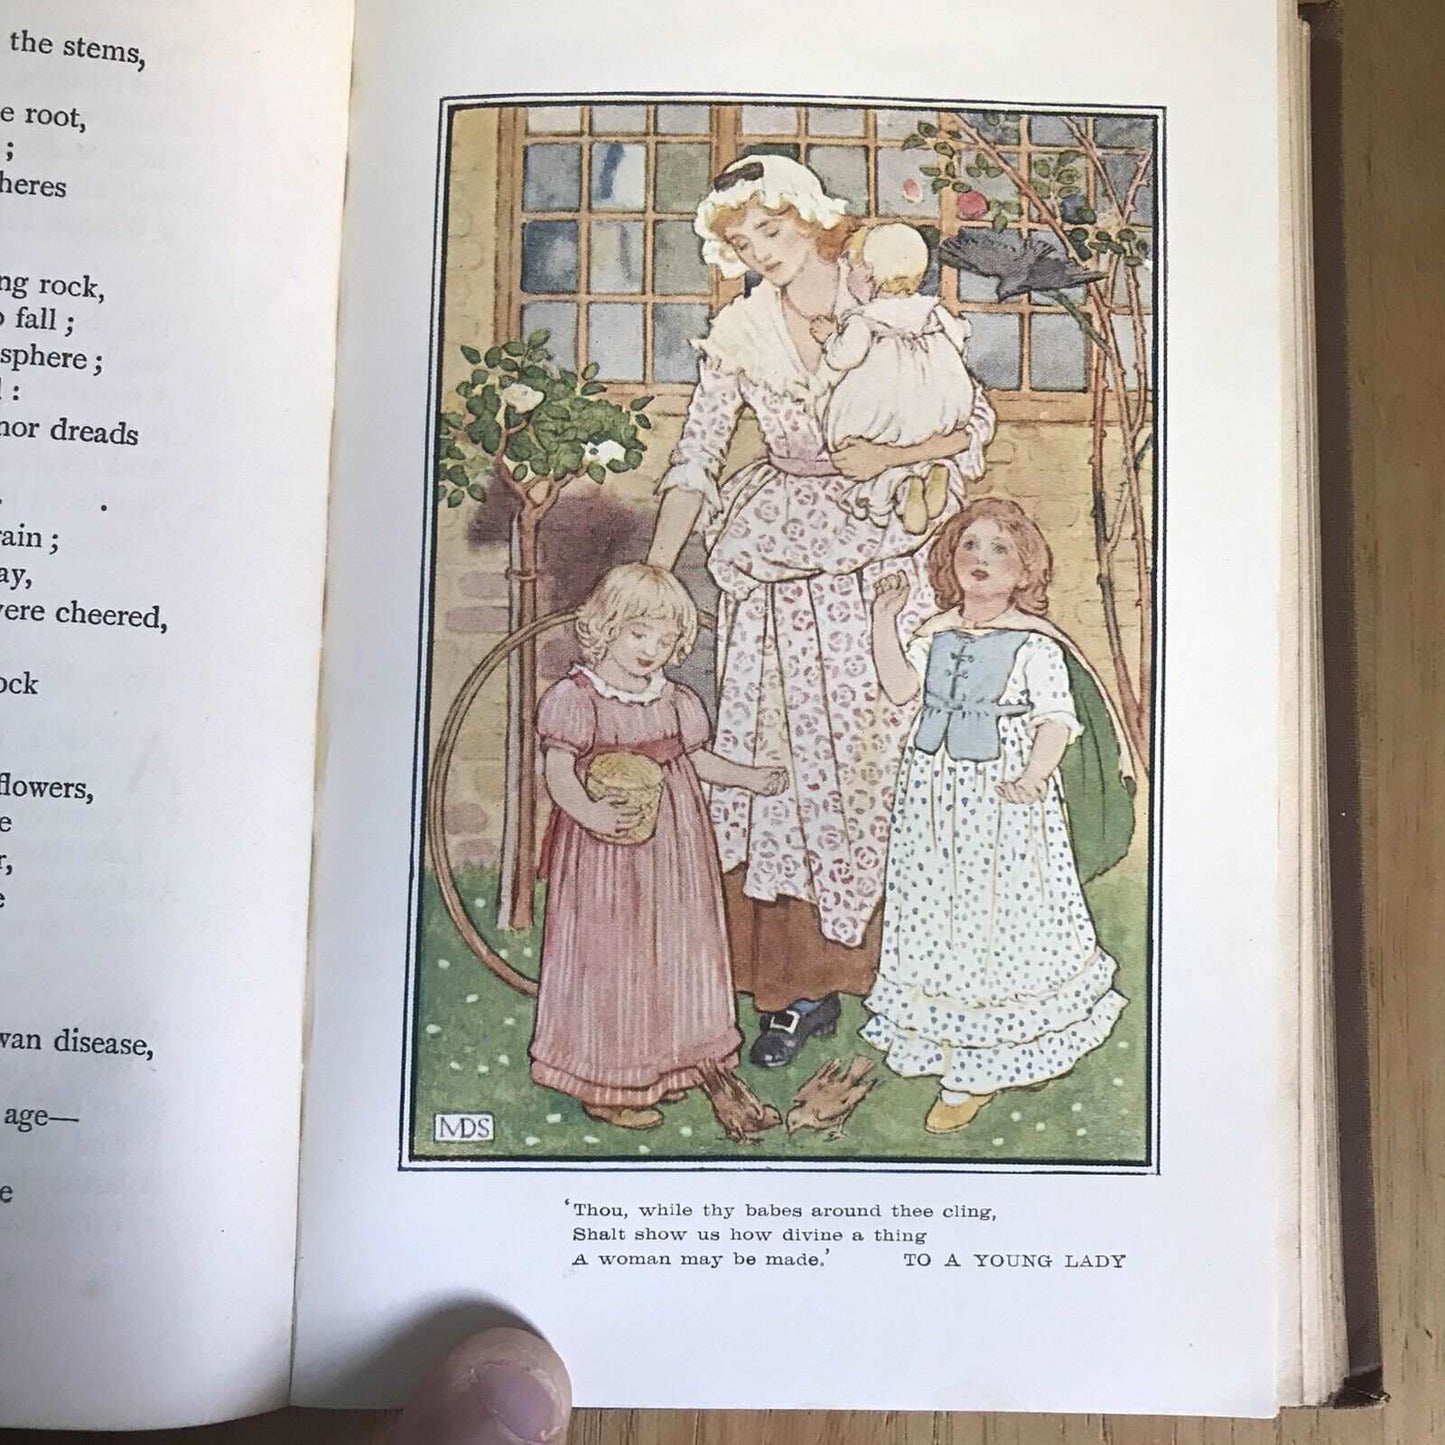 1922 Poems Of Wordsworth - MacNeile Dixon(Dibdin Spooner illust) Caxton Honeyburn Books (UK)